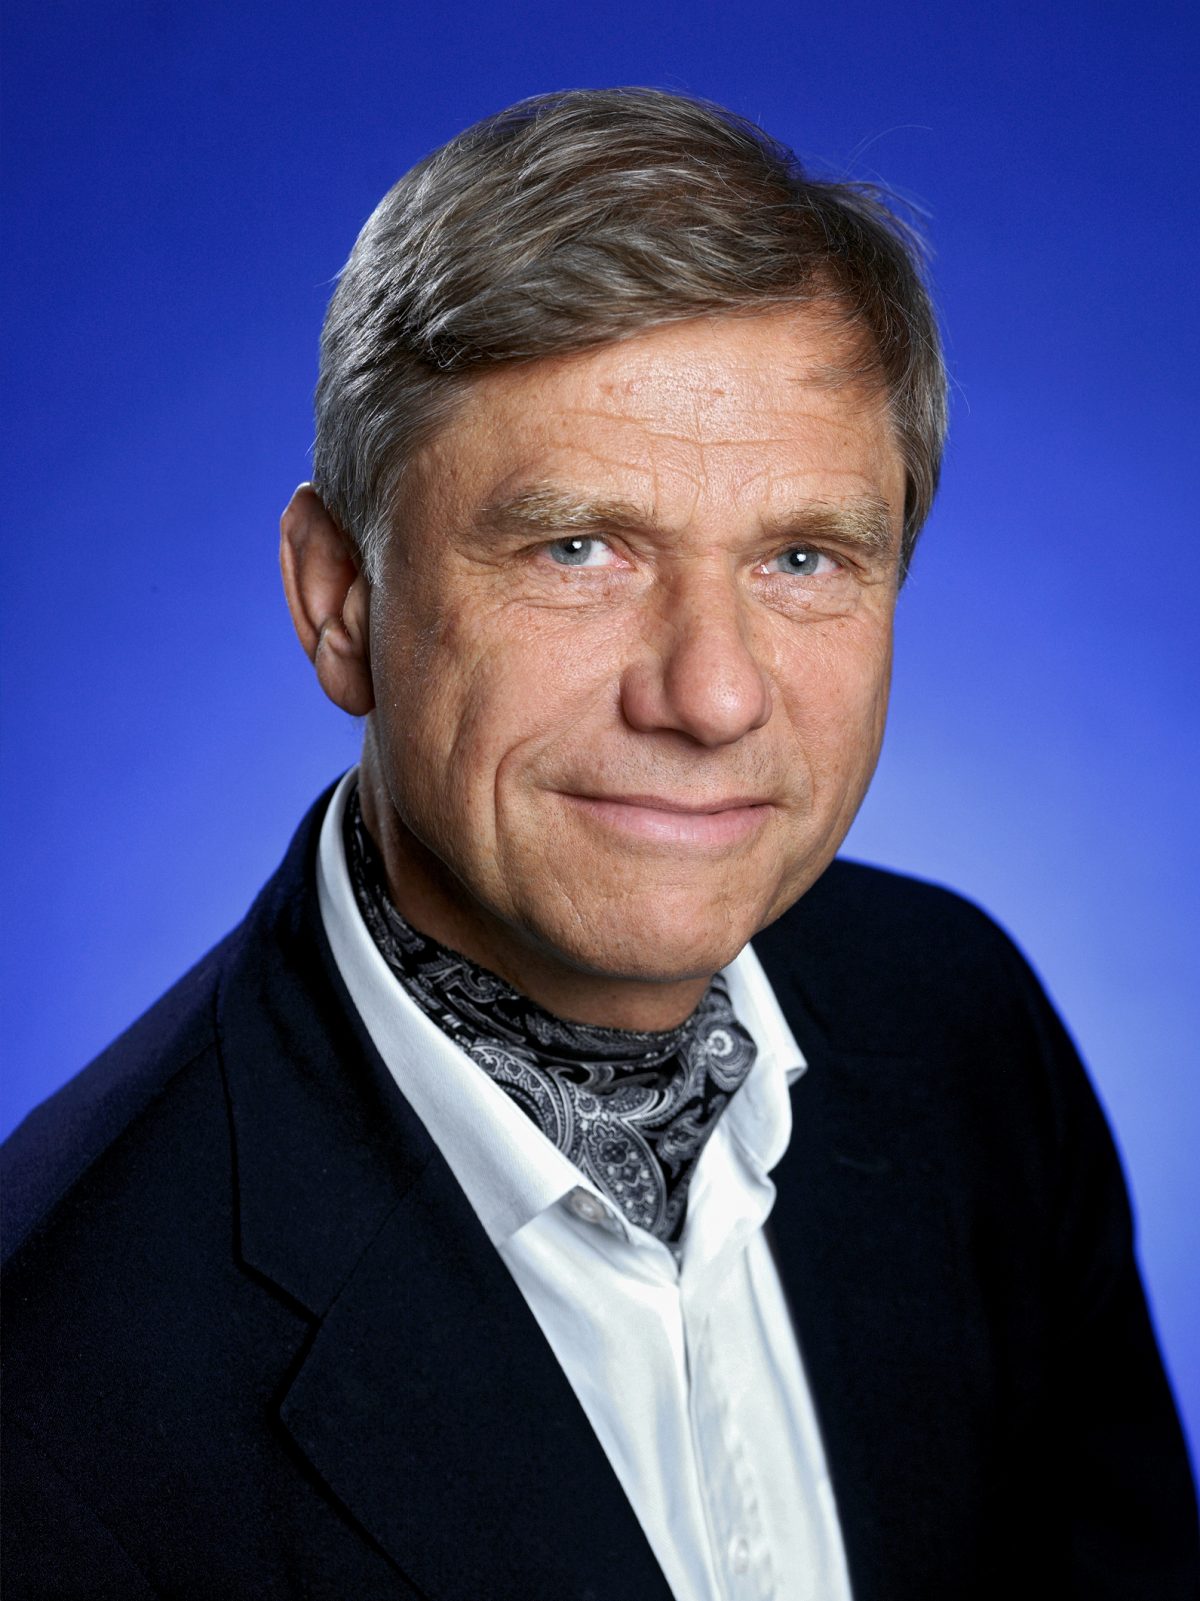 Dr. Hermann Hauser